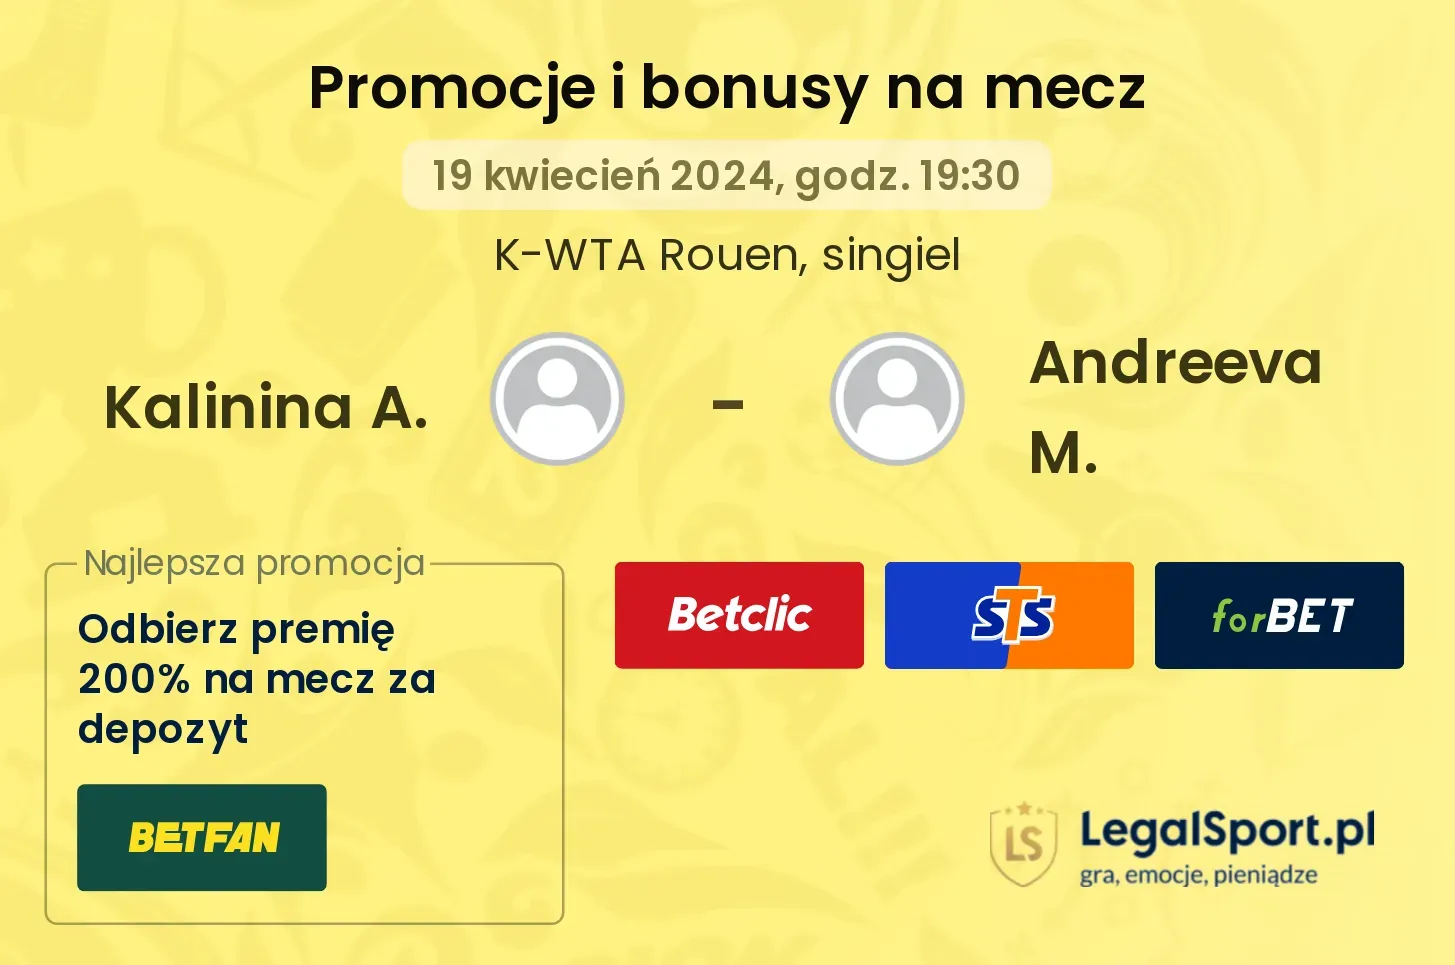 Kalinina A. - Andreeva M. promocje bonusy na mecz